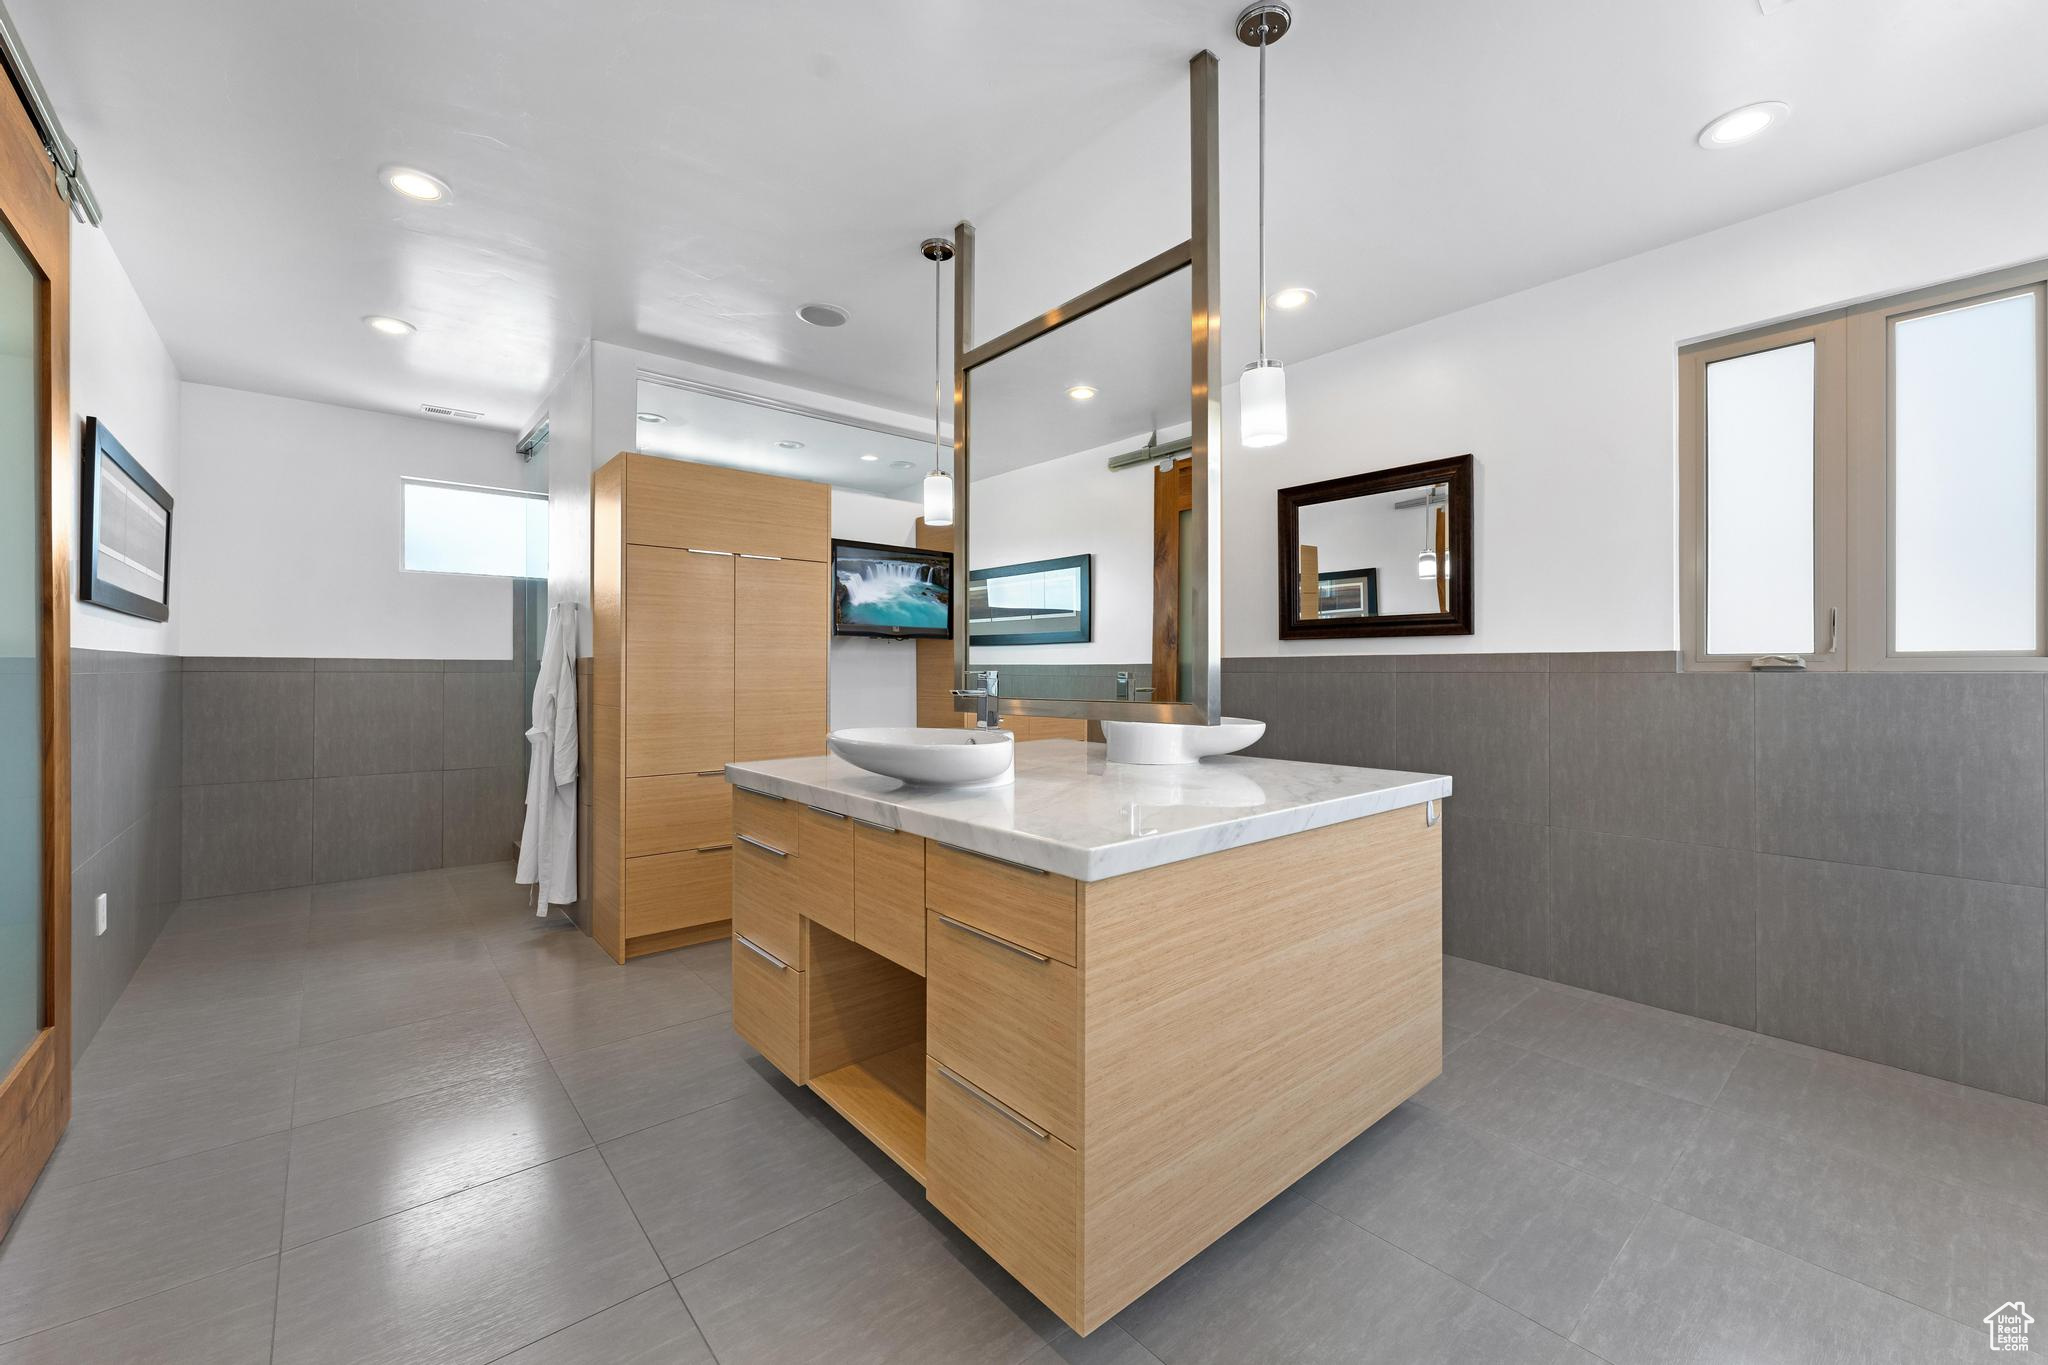 Kitchen featuring a kitchen island, light tile flooring, sink, tile walls, and decorative light fixtures